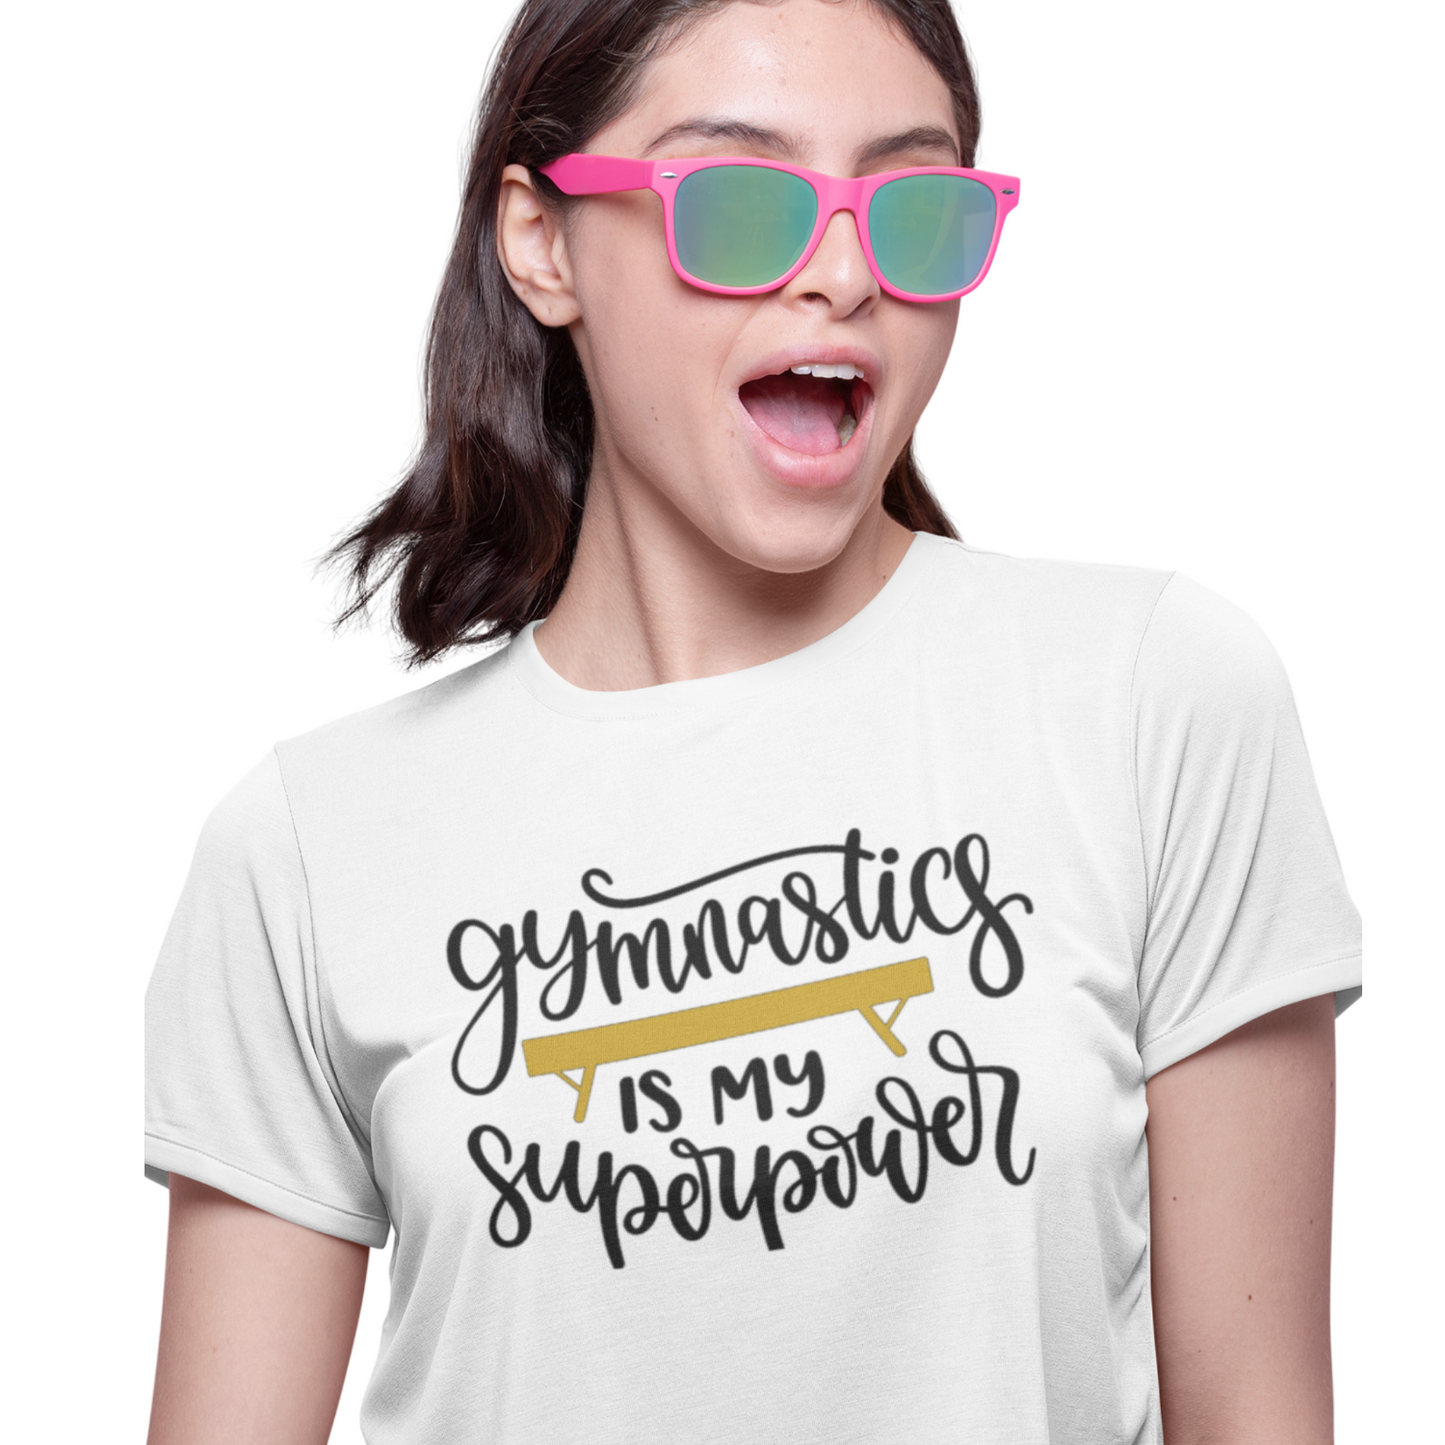 "Gymnastics is my superpower" Cropped Tee